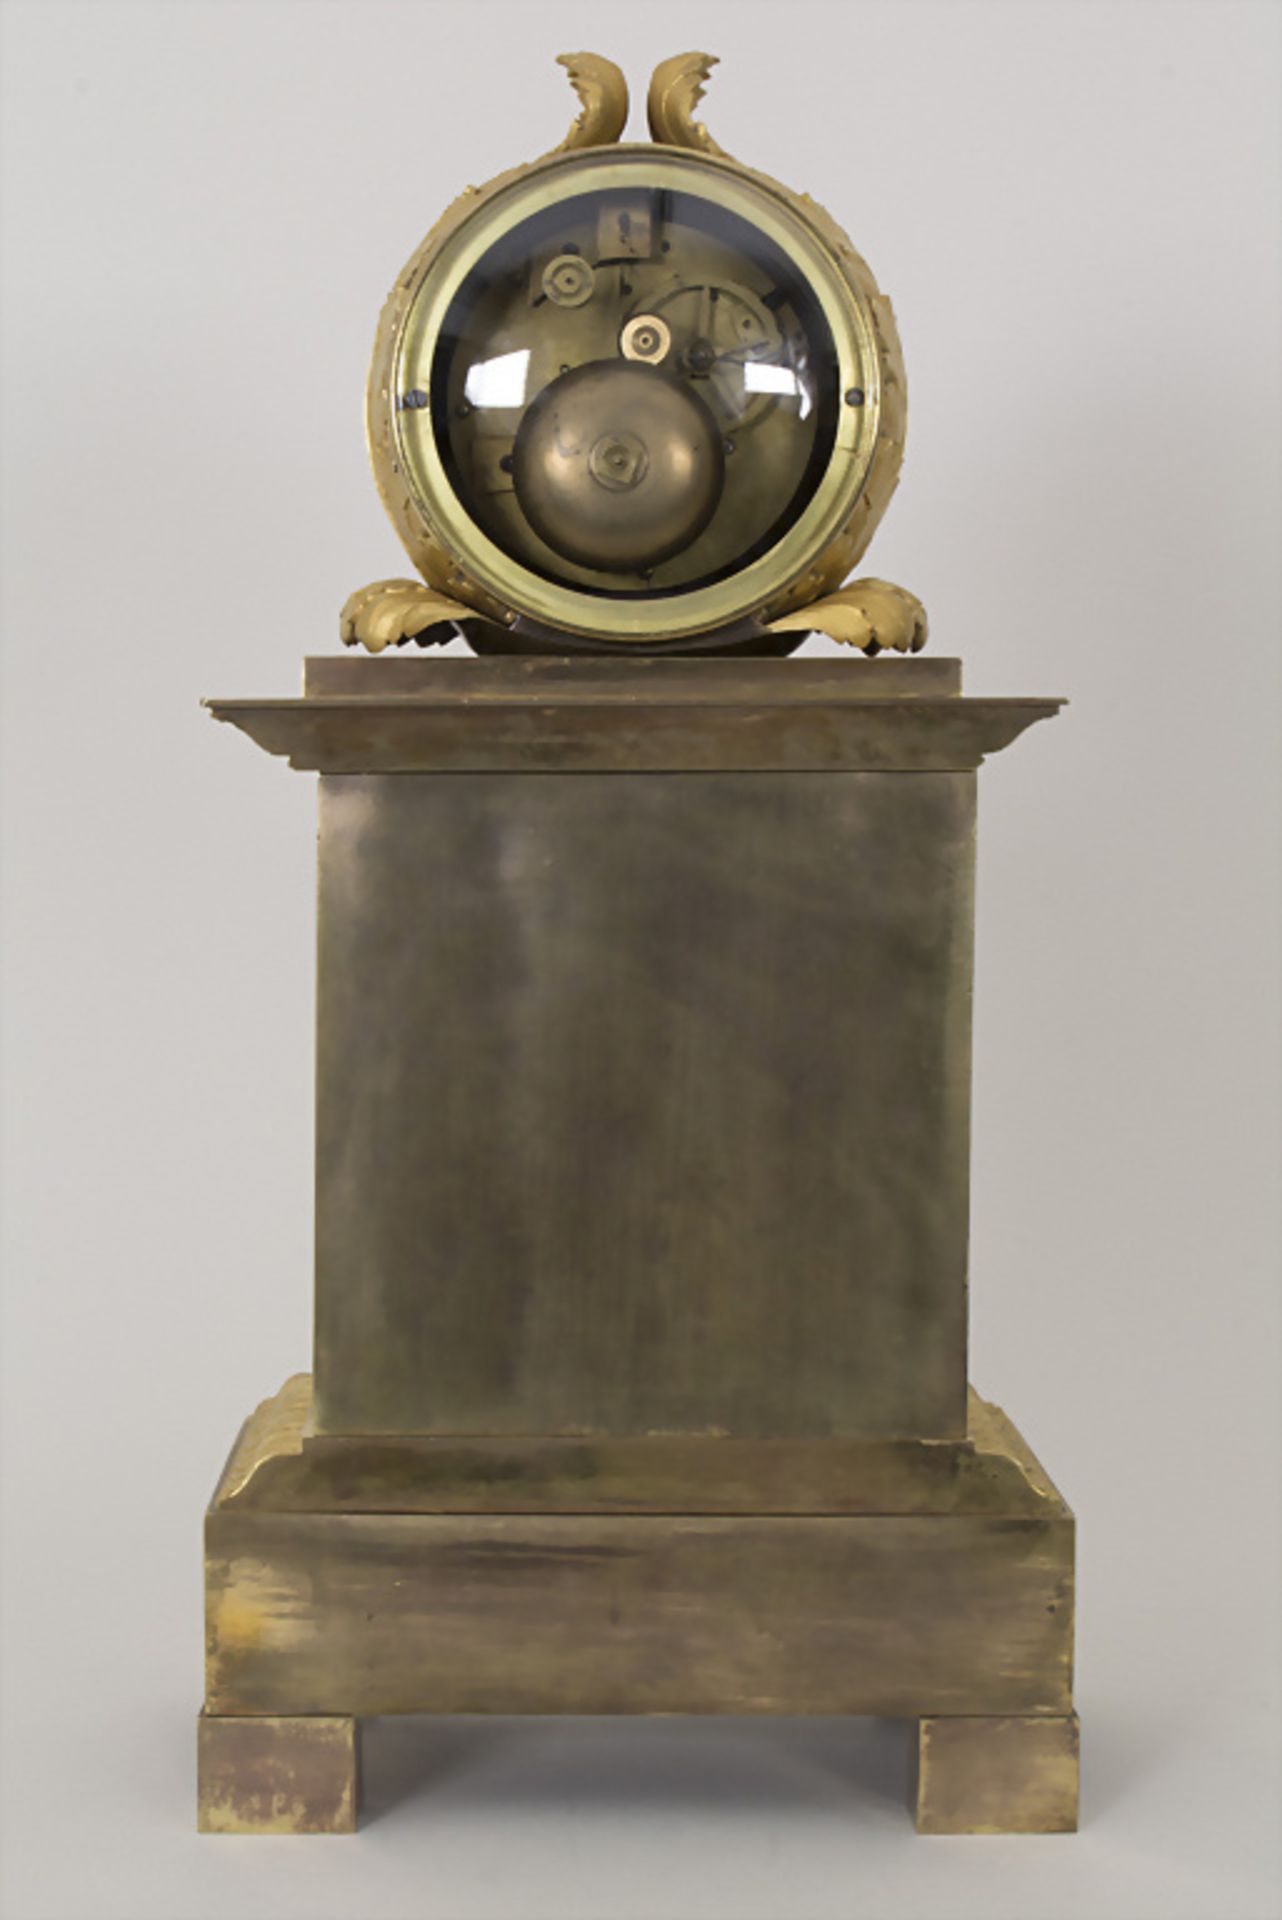 Empire Pendule 'Die Künste' / An Empire clock 'The fine arts', Paris, um 1800 - Image 4 of 11